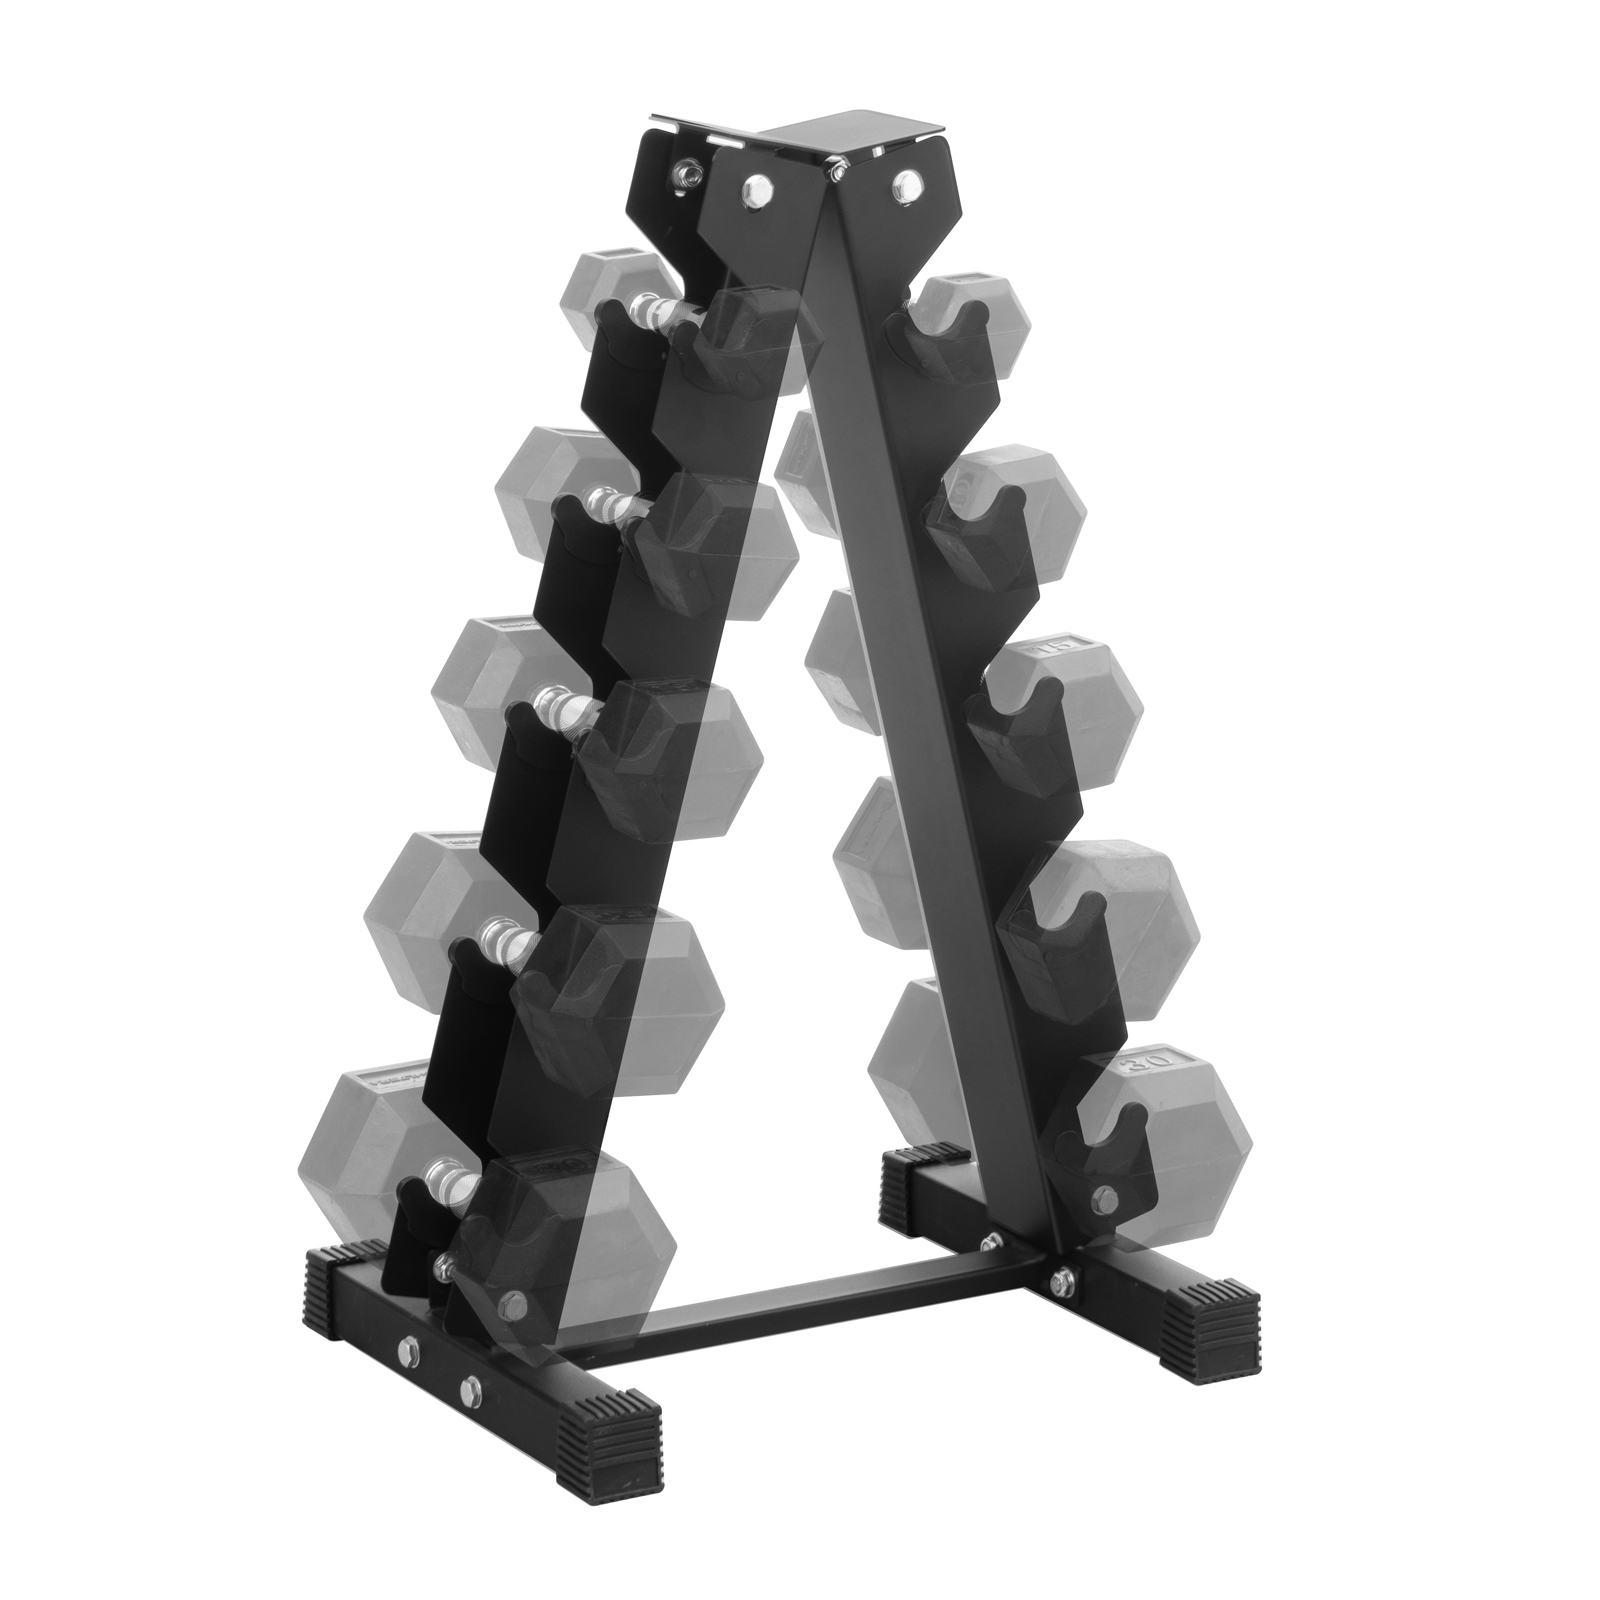 Mancuernas Hexagonales (Par) - Ruster – Home Fitness Racks